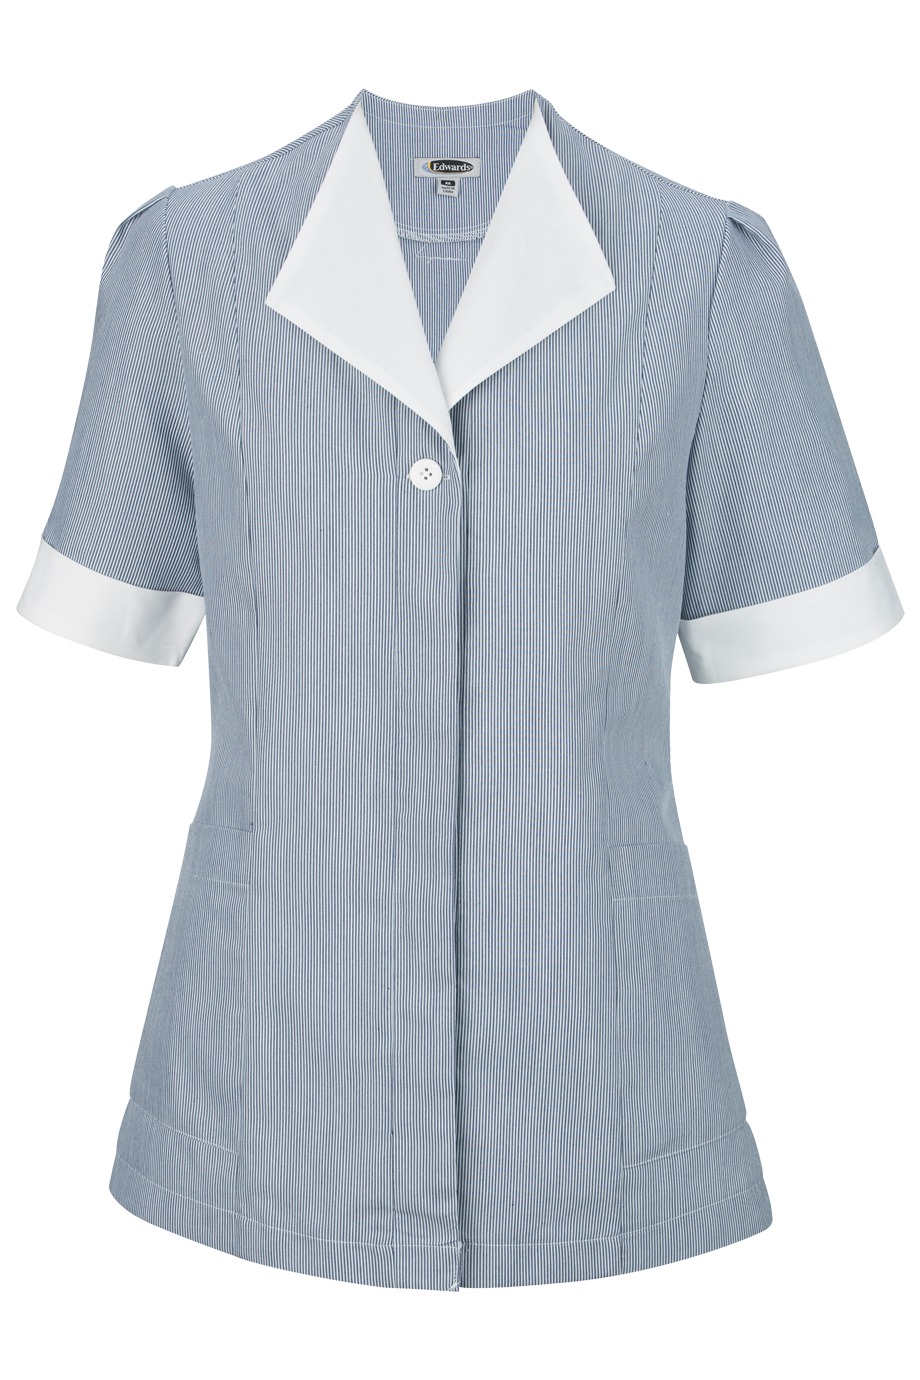 Edwards Garment 7275 - Women's Junior Cord Tunic